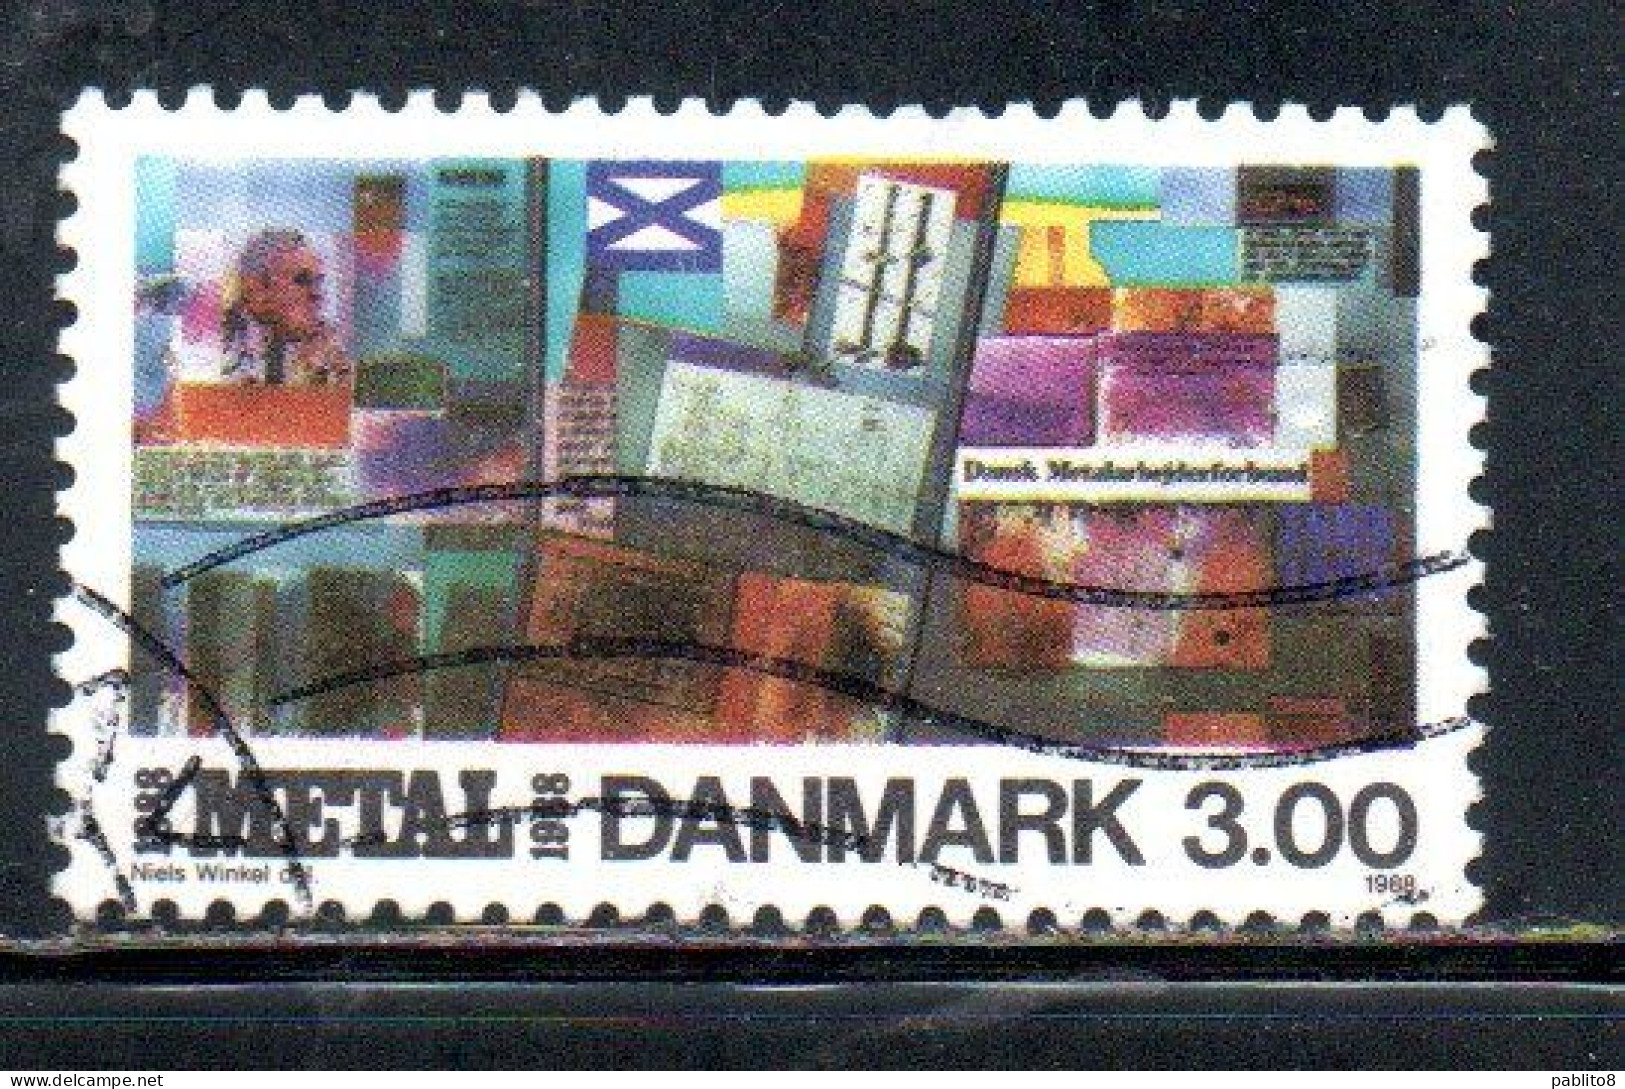 DANEMARK DANMARK DENMARK DANIMARCA 1988 DANISH METALWORKERS' UNION CENTENARY GLASS MOSAIC 3k USED USATO OBLITERE' - Used Stamps